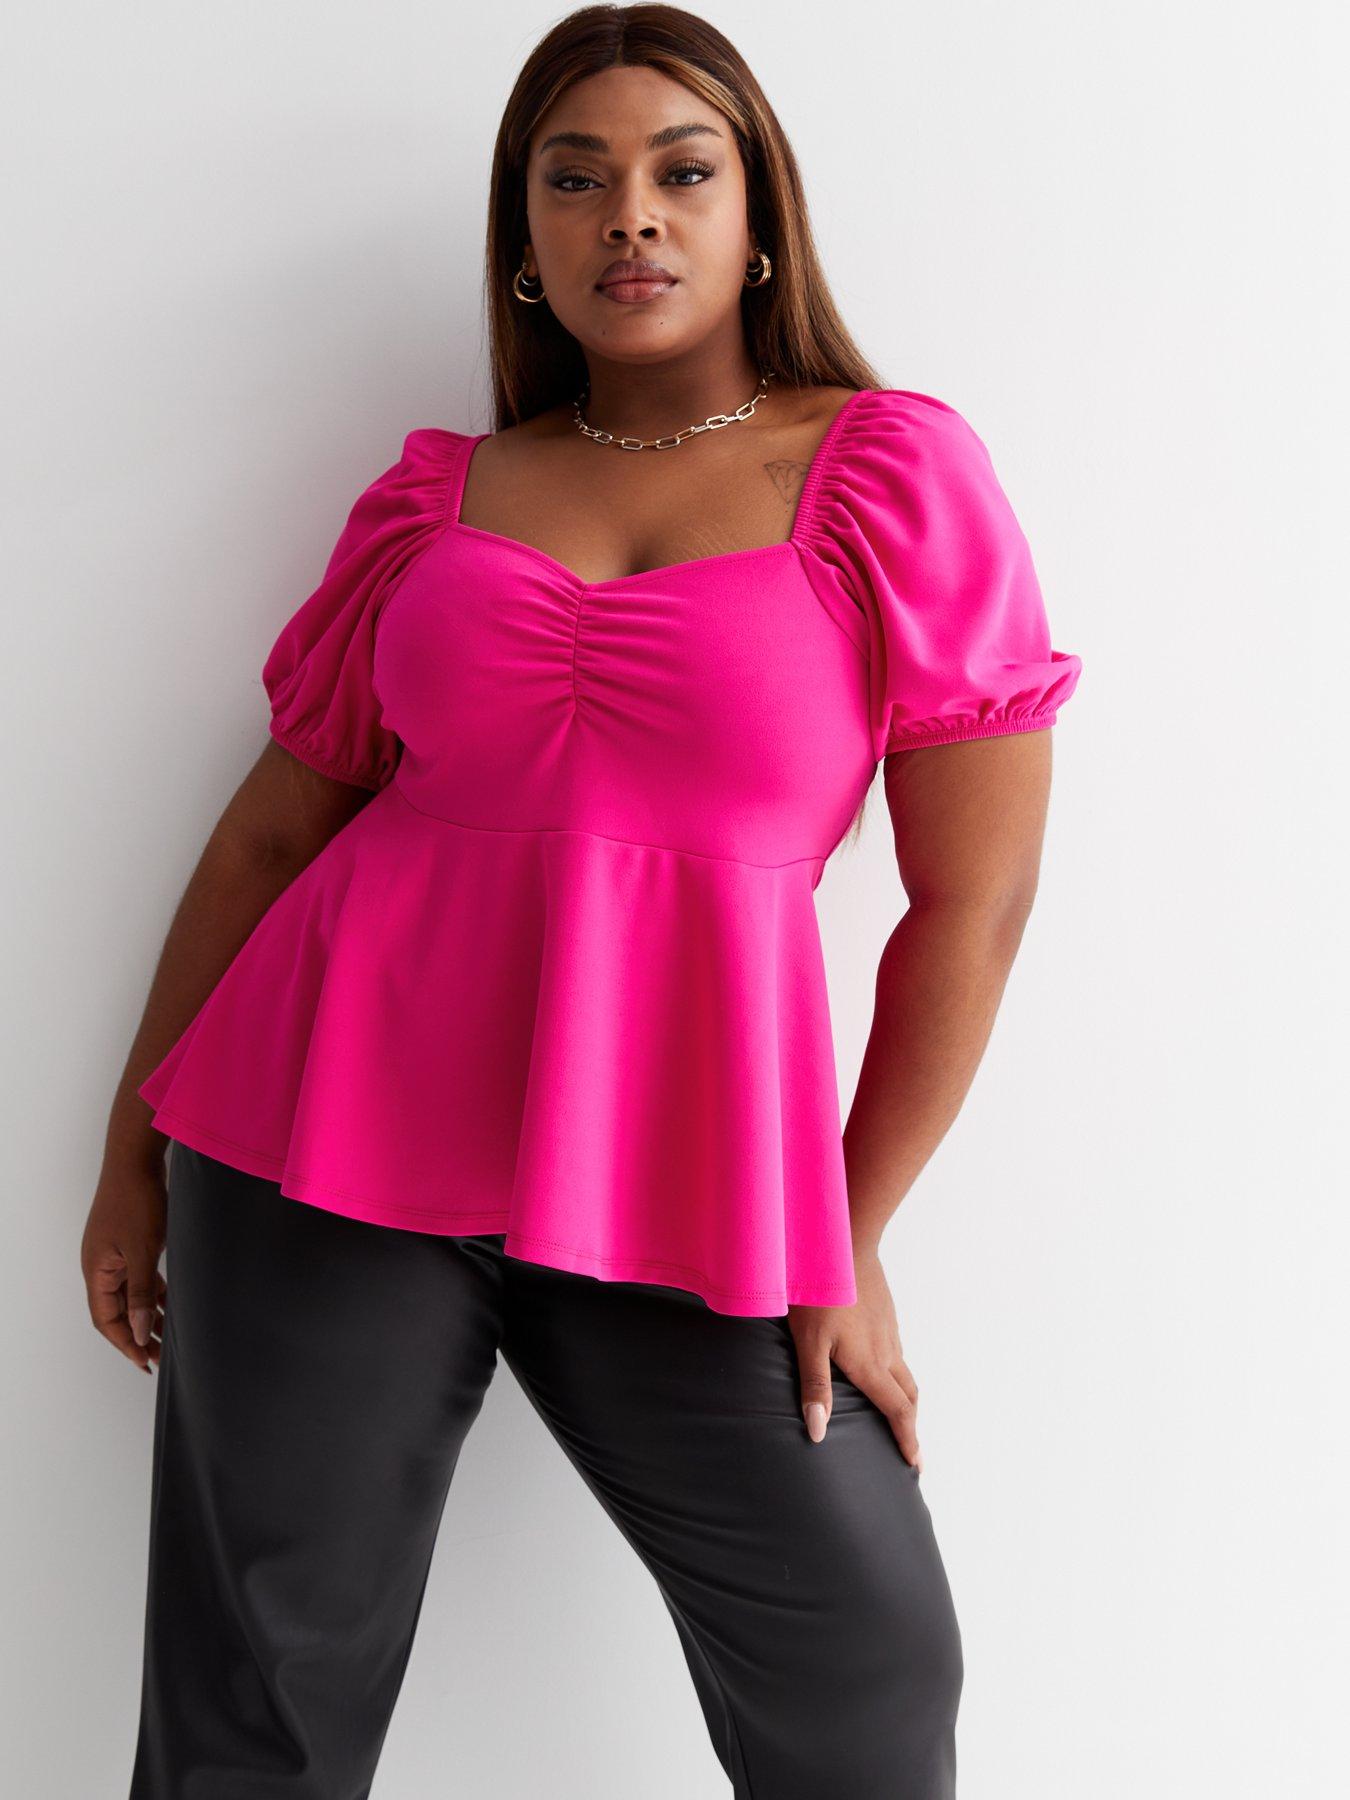 discount 84% WOMEN FASHION Shirts & T-shirts Lace Stradivarius T-shirt Pink S 